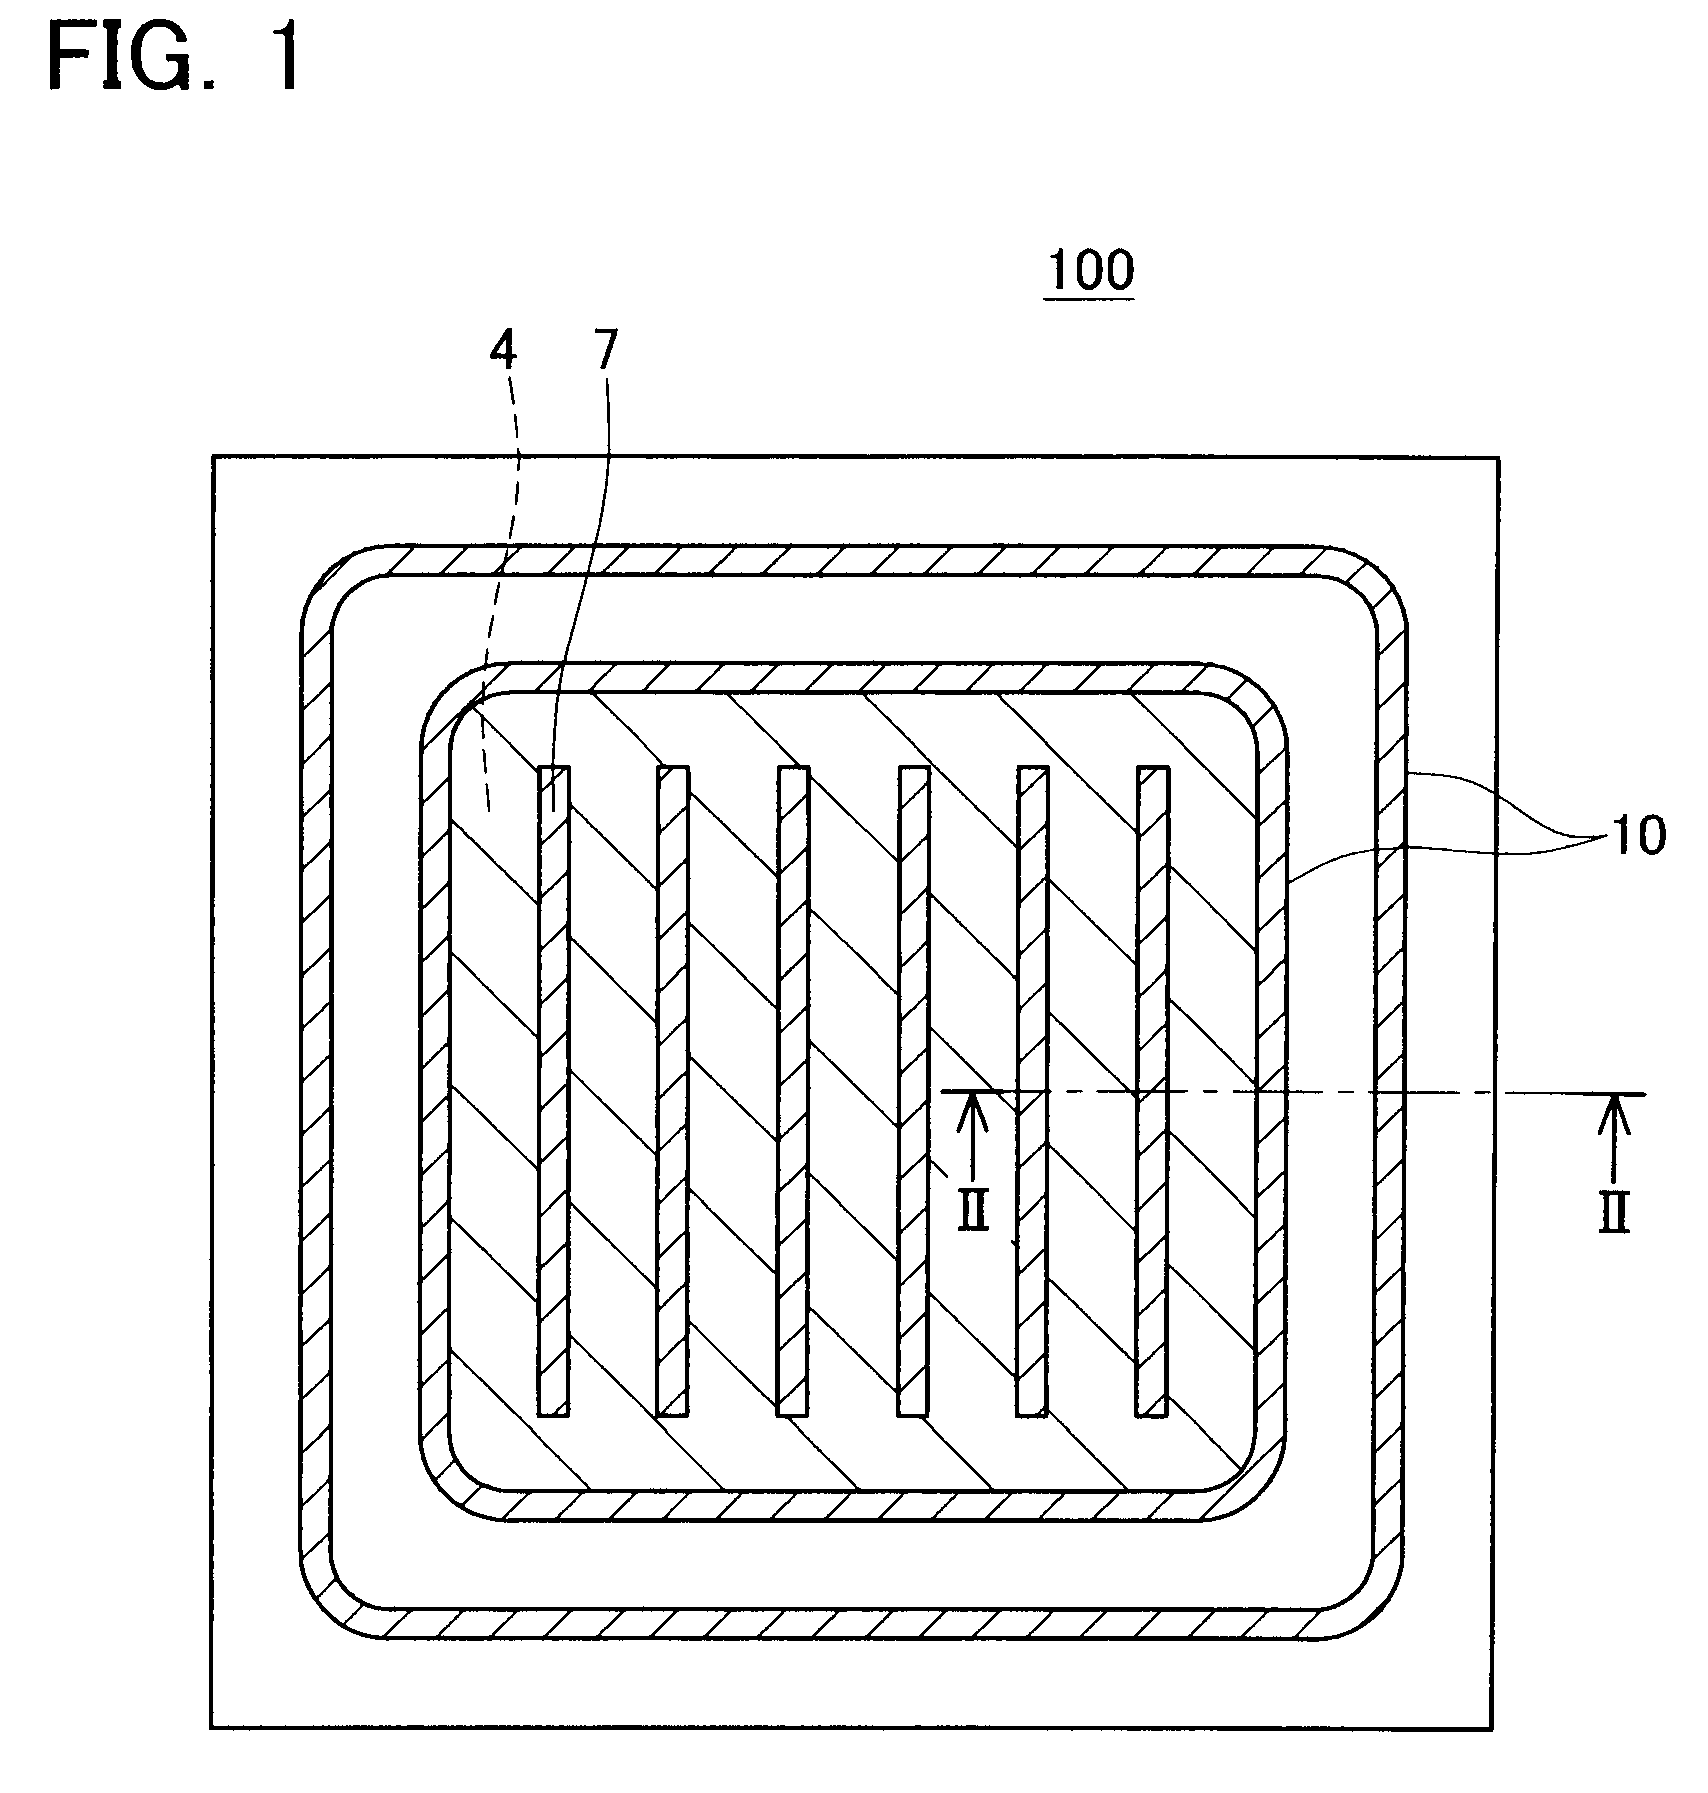 IGBT semiconductor device